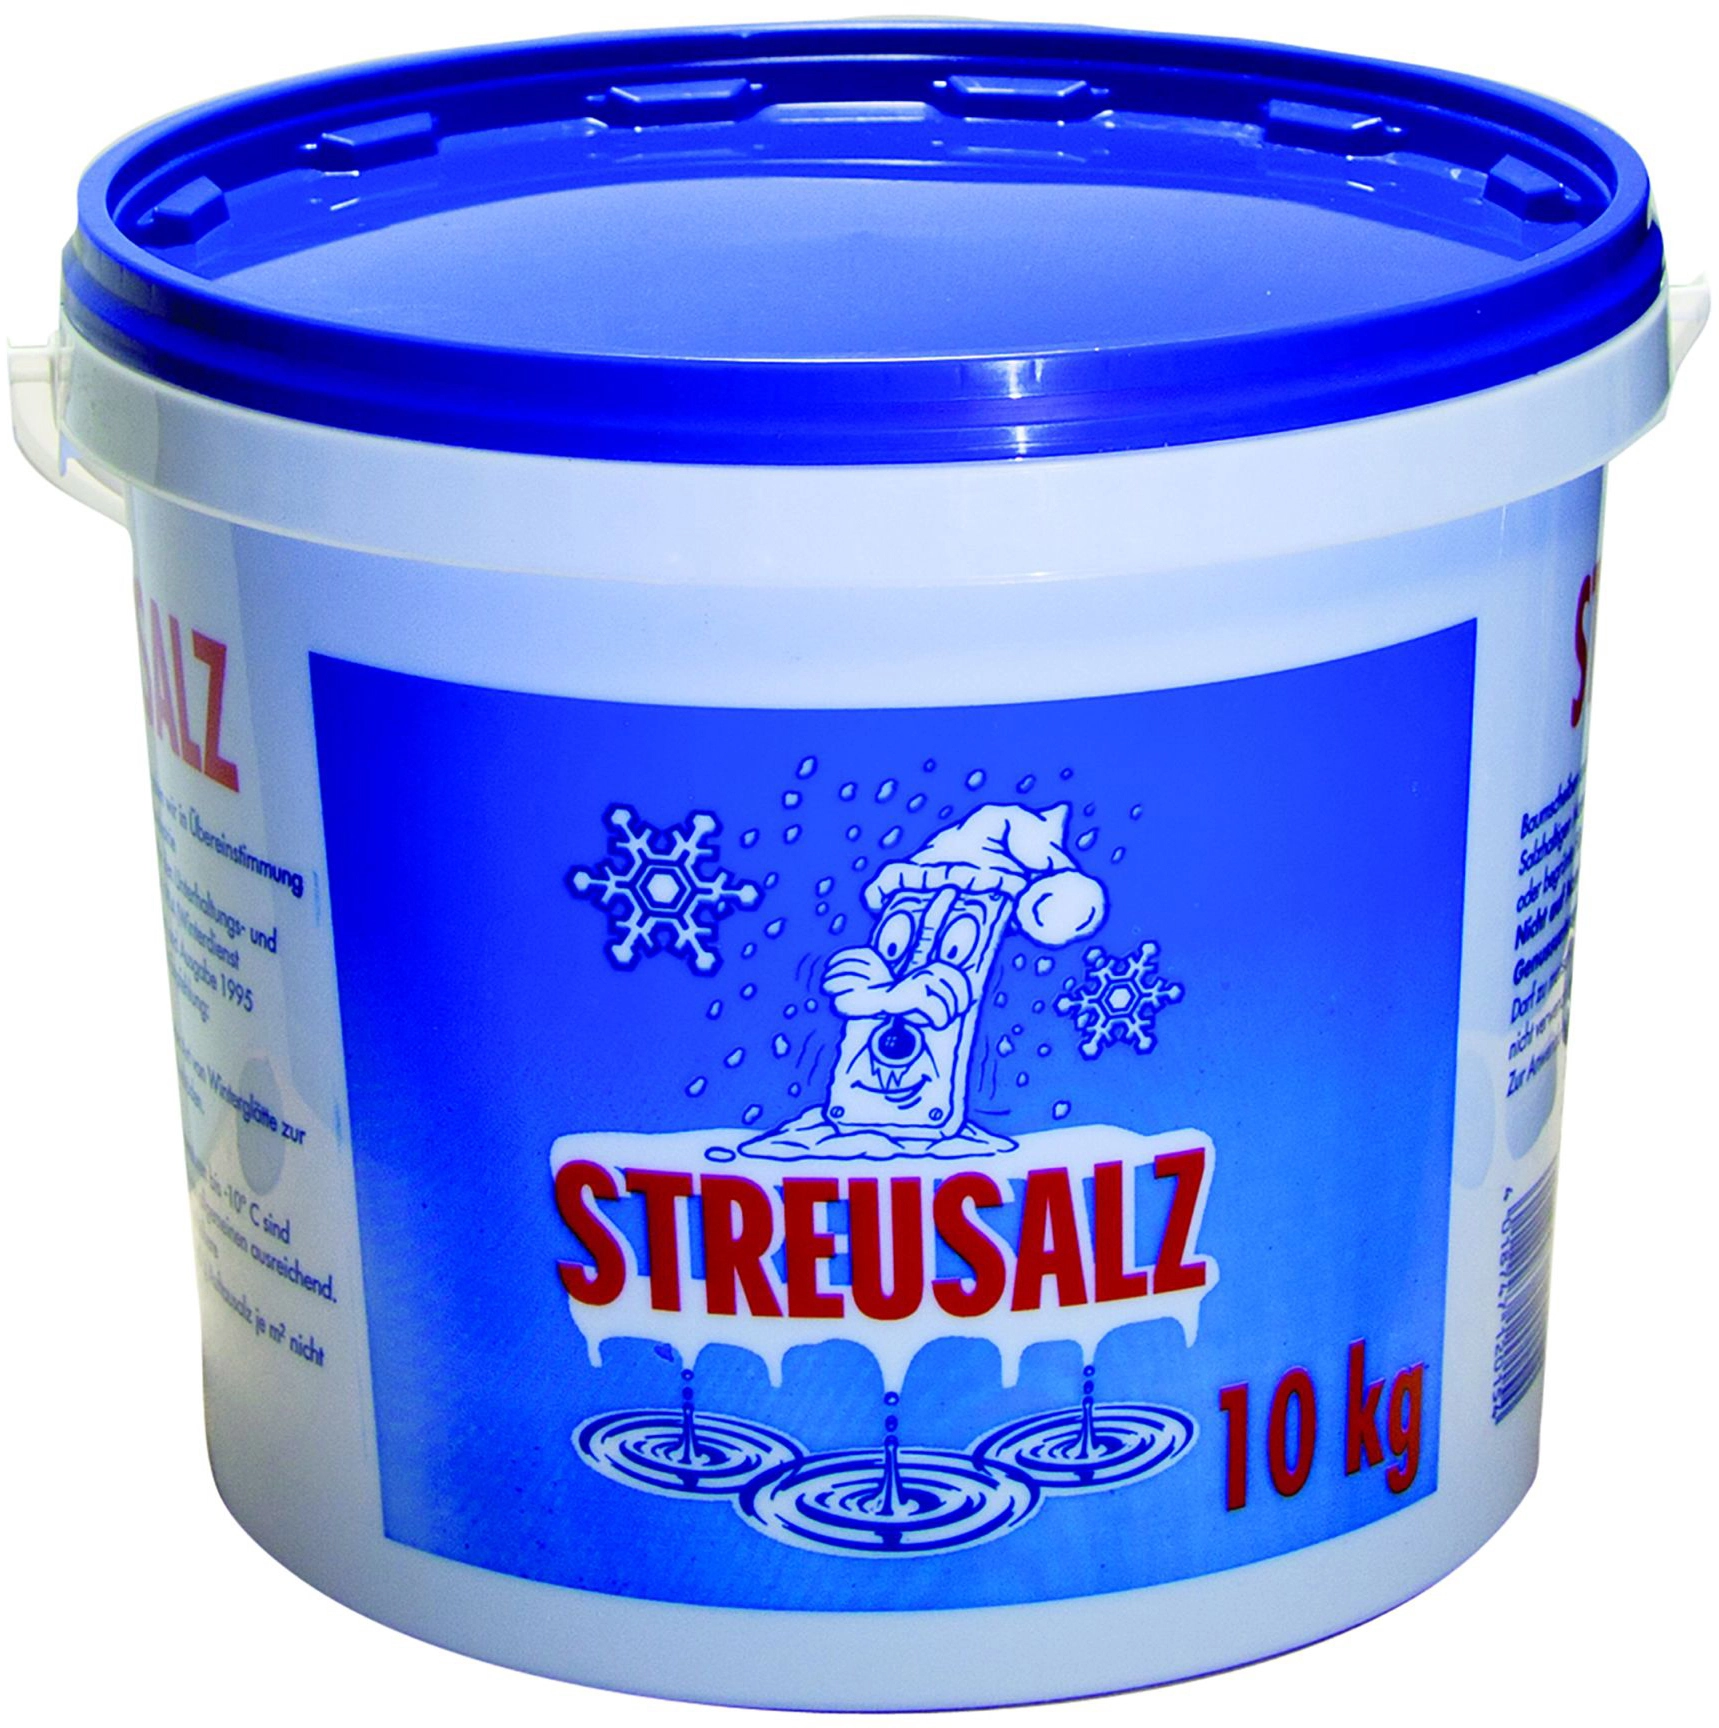 Streusalz 10 kg-BBM Onlineshop